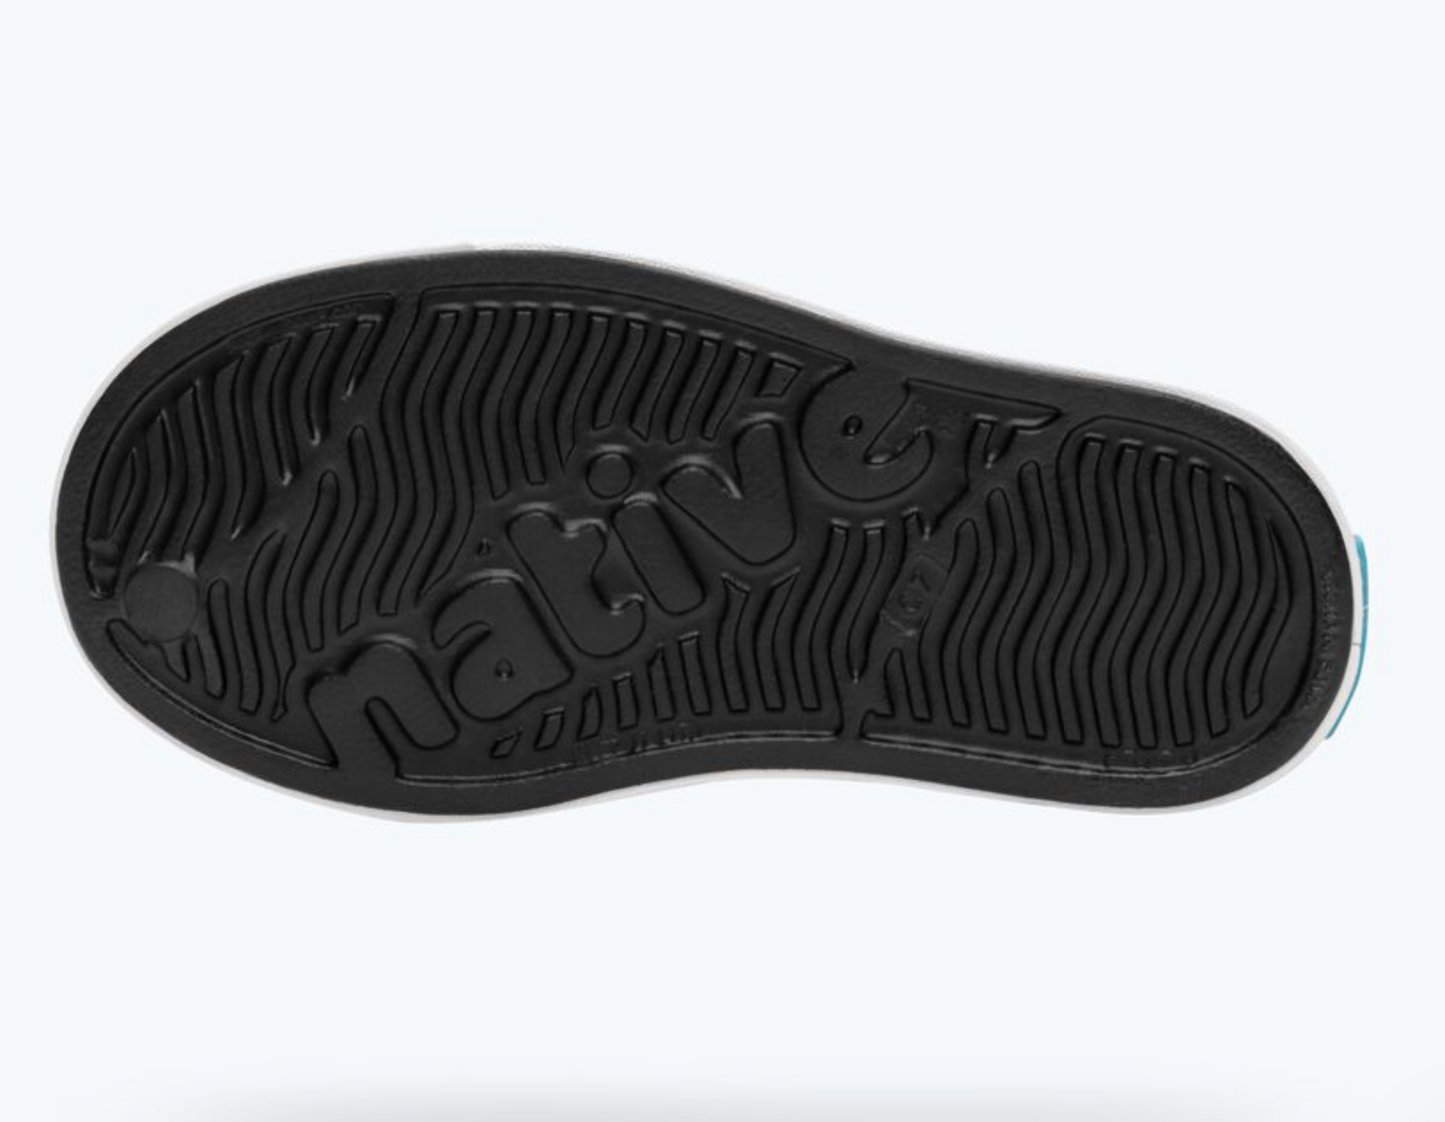 Native Jefferson Jiffy Black/Shell White Slip On Shoe